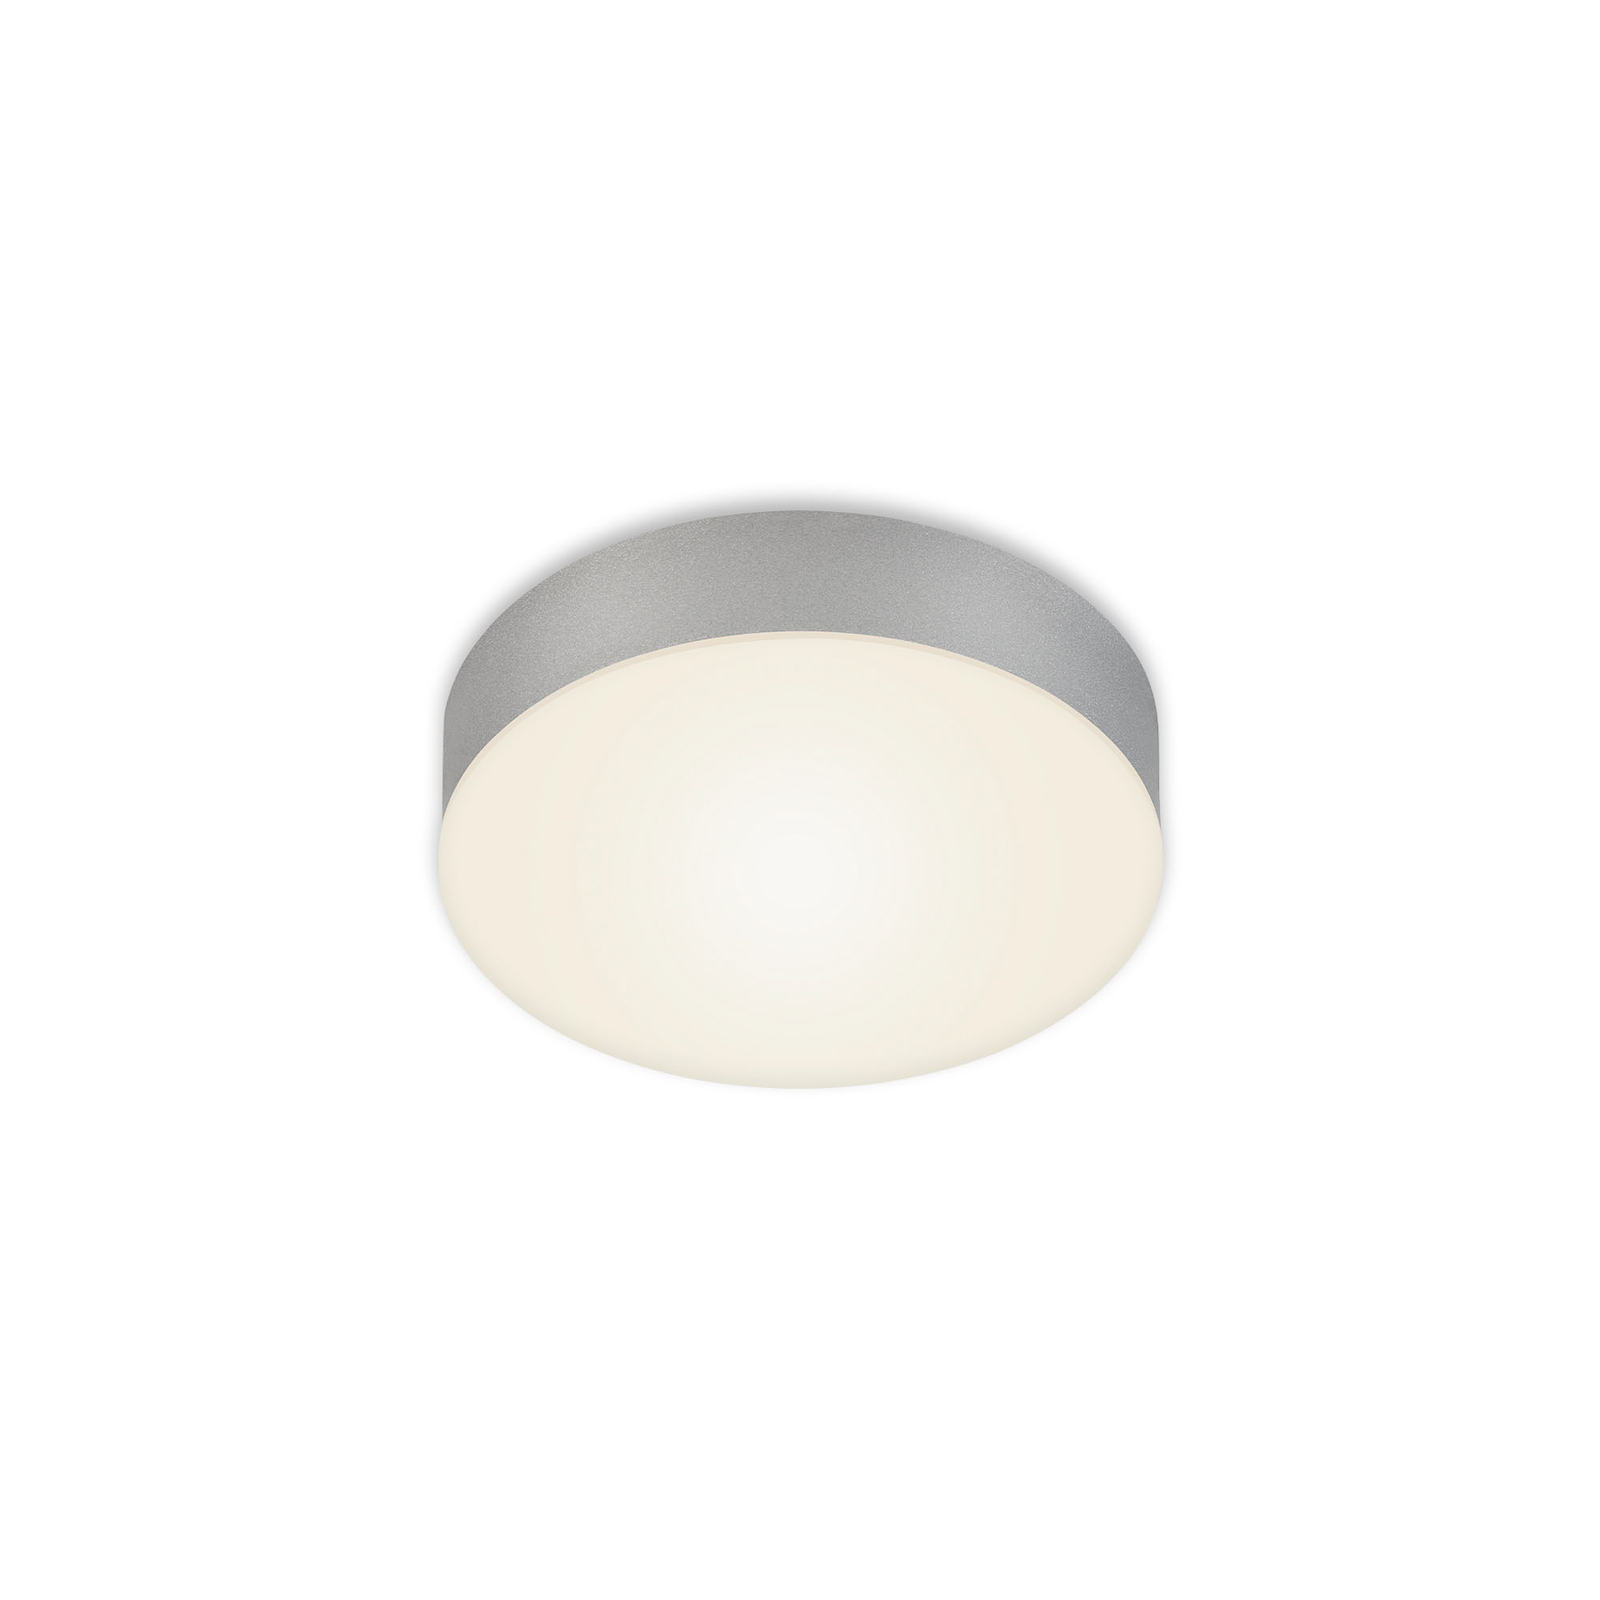 Flame LED plafondlamp, Ø 15,7 cm, zilver